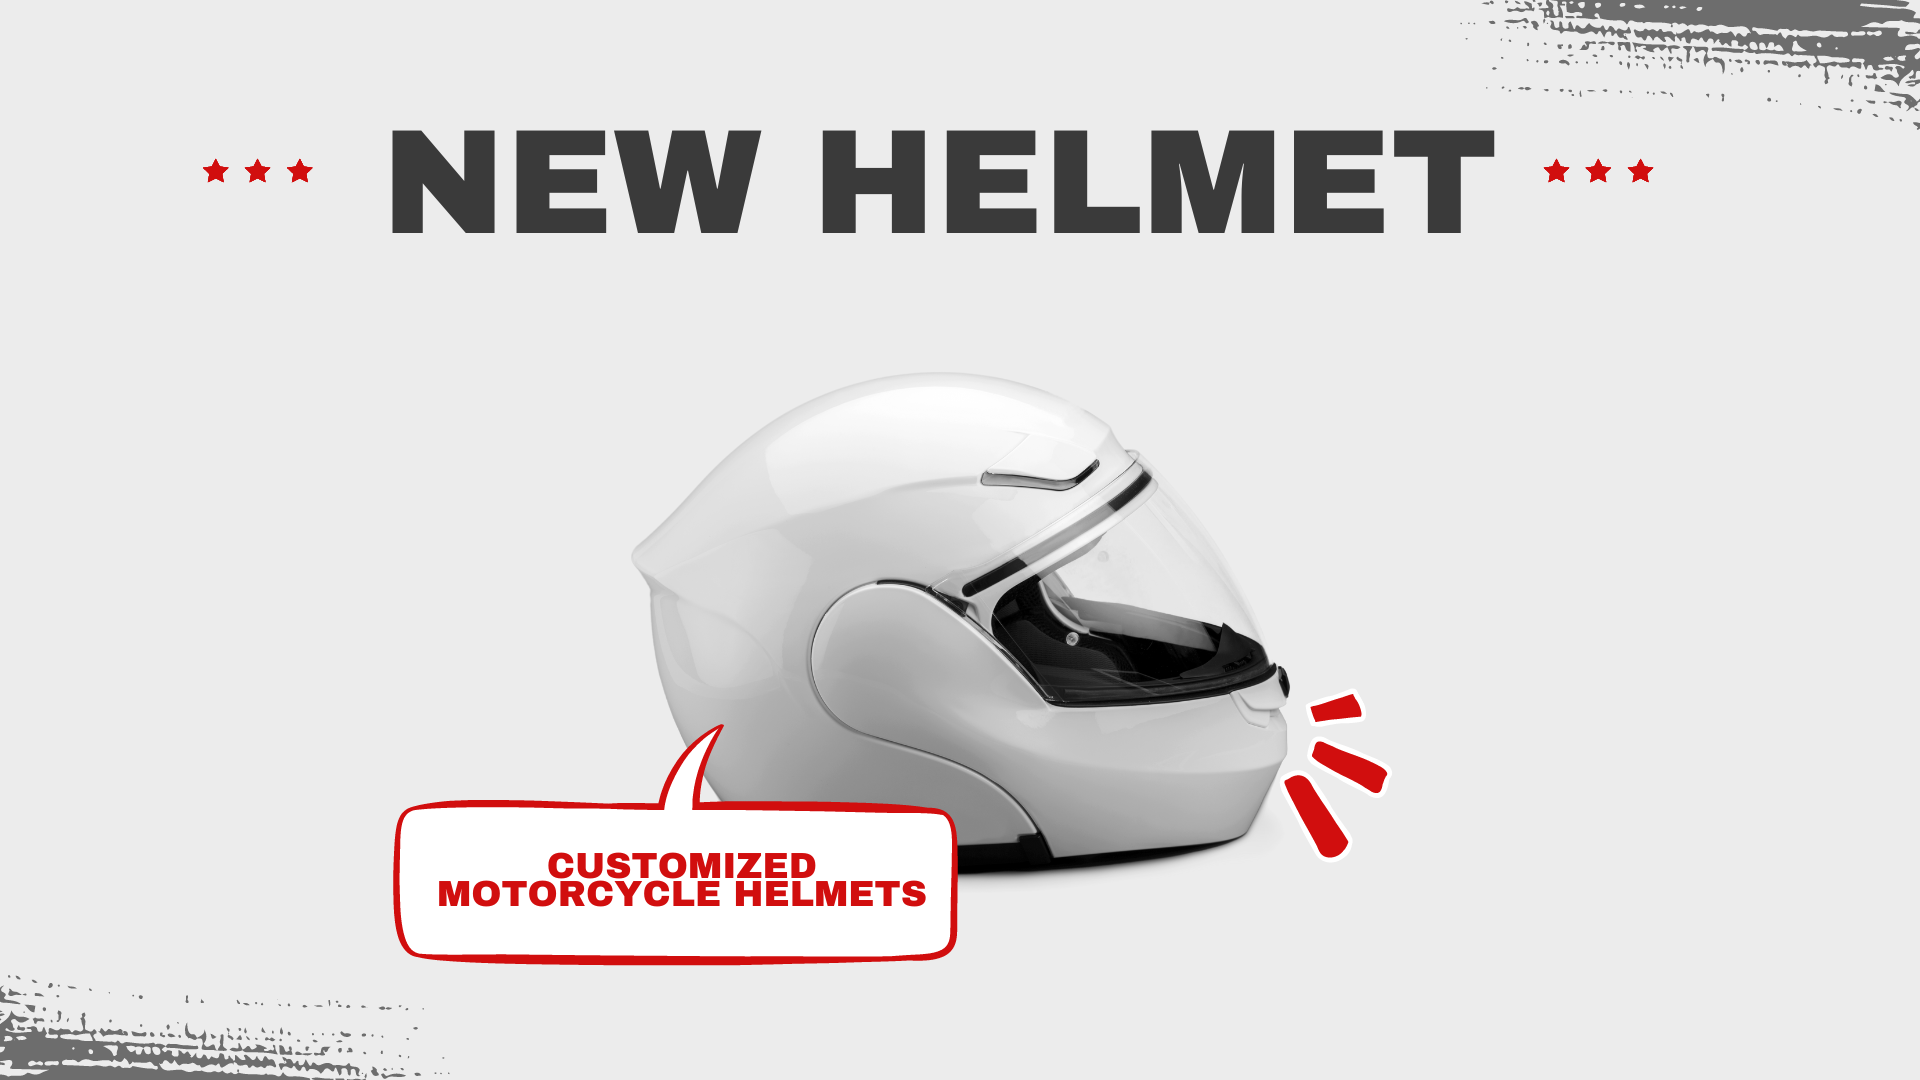 Customized Motorcycle Helmets